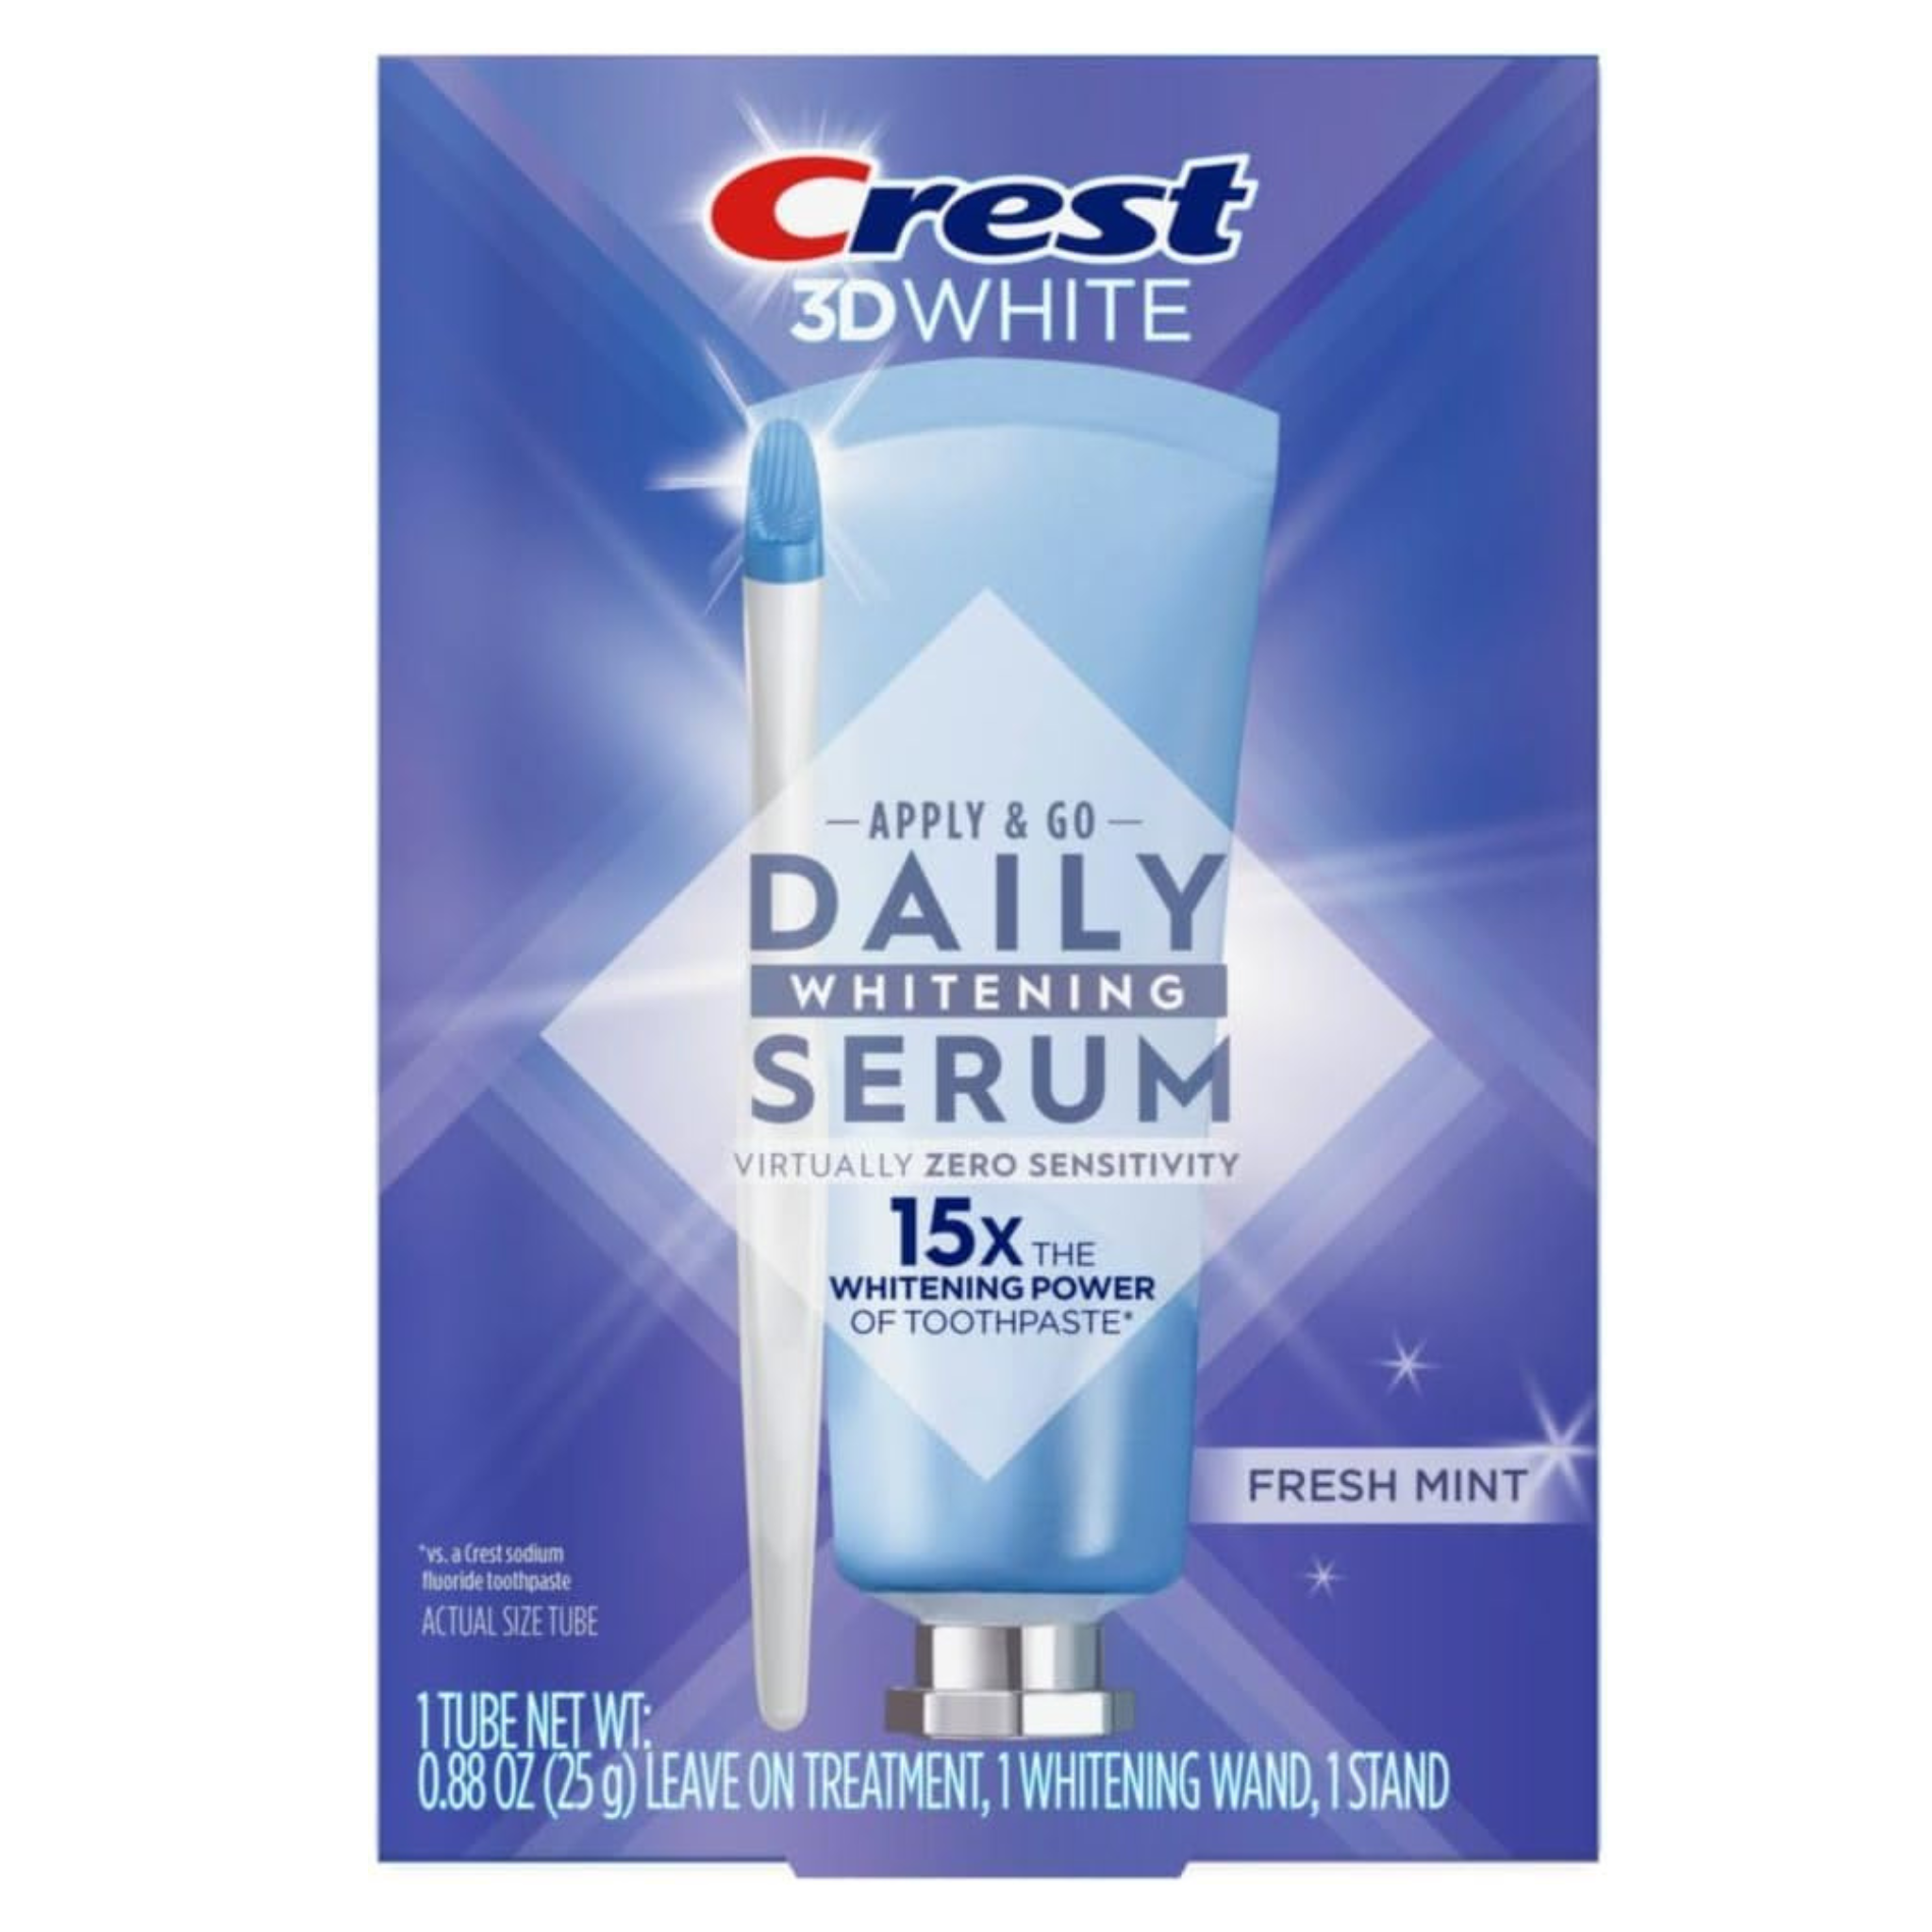 Crest 3DWhite Daily Whitening Serum Treatment Kit